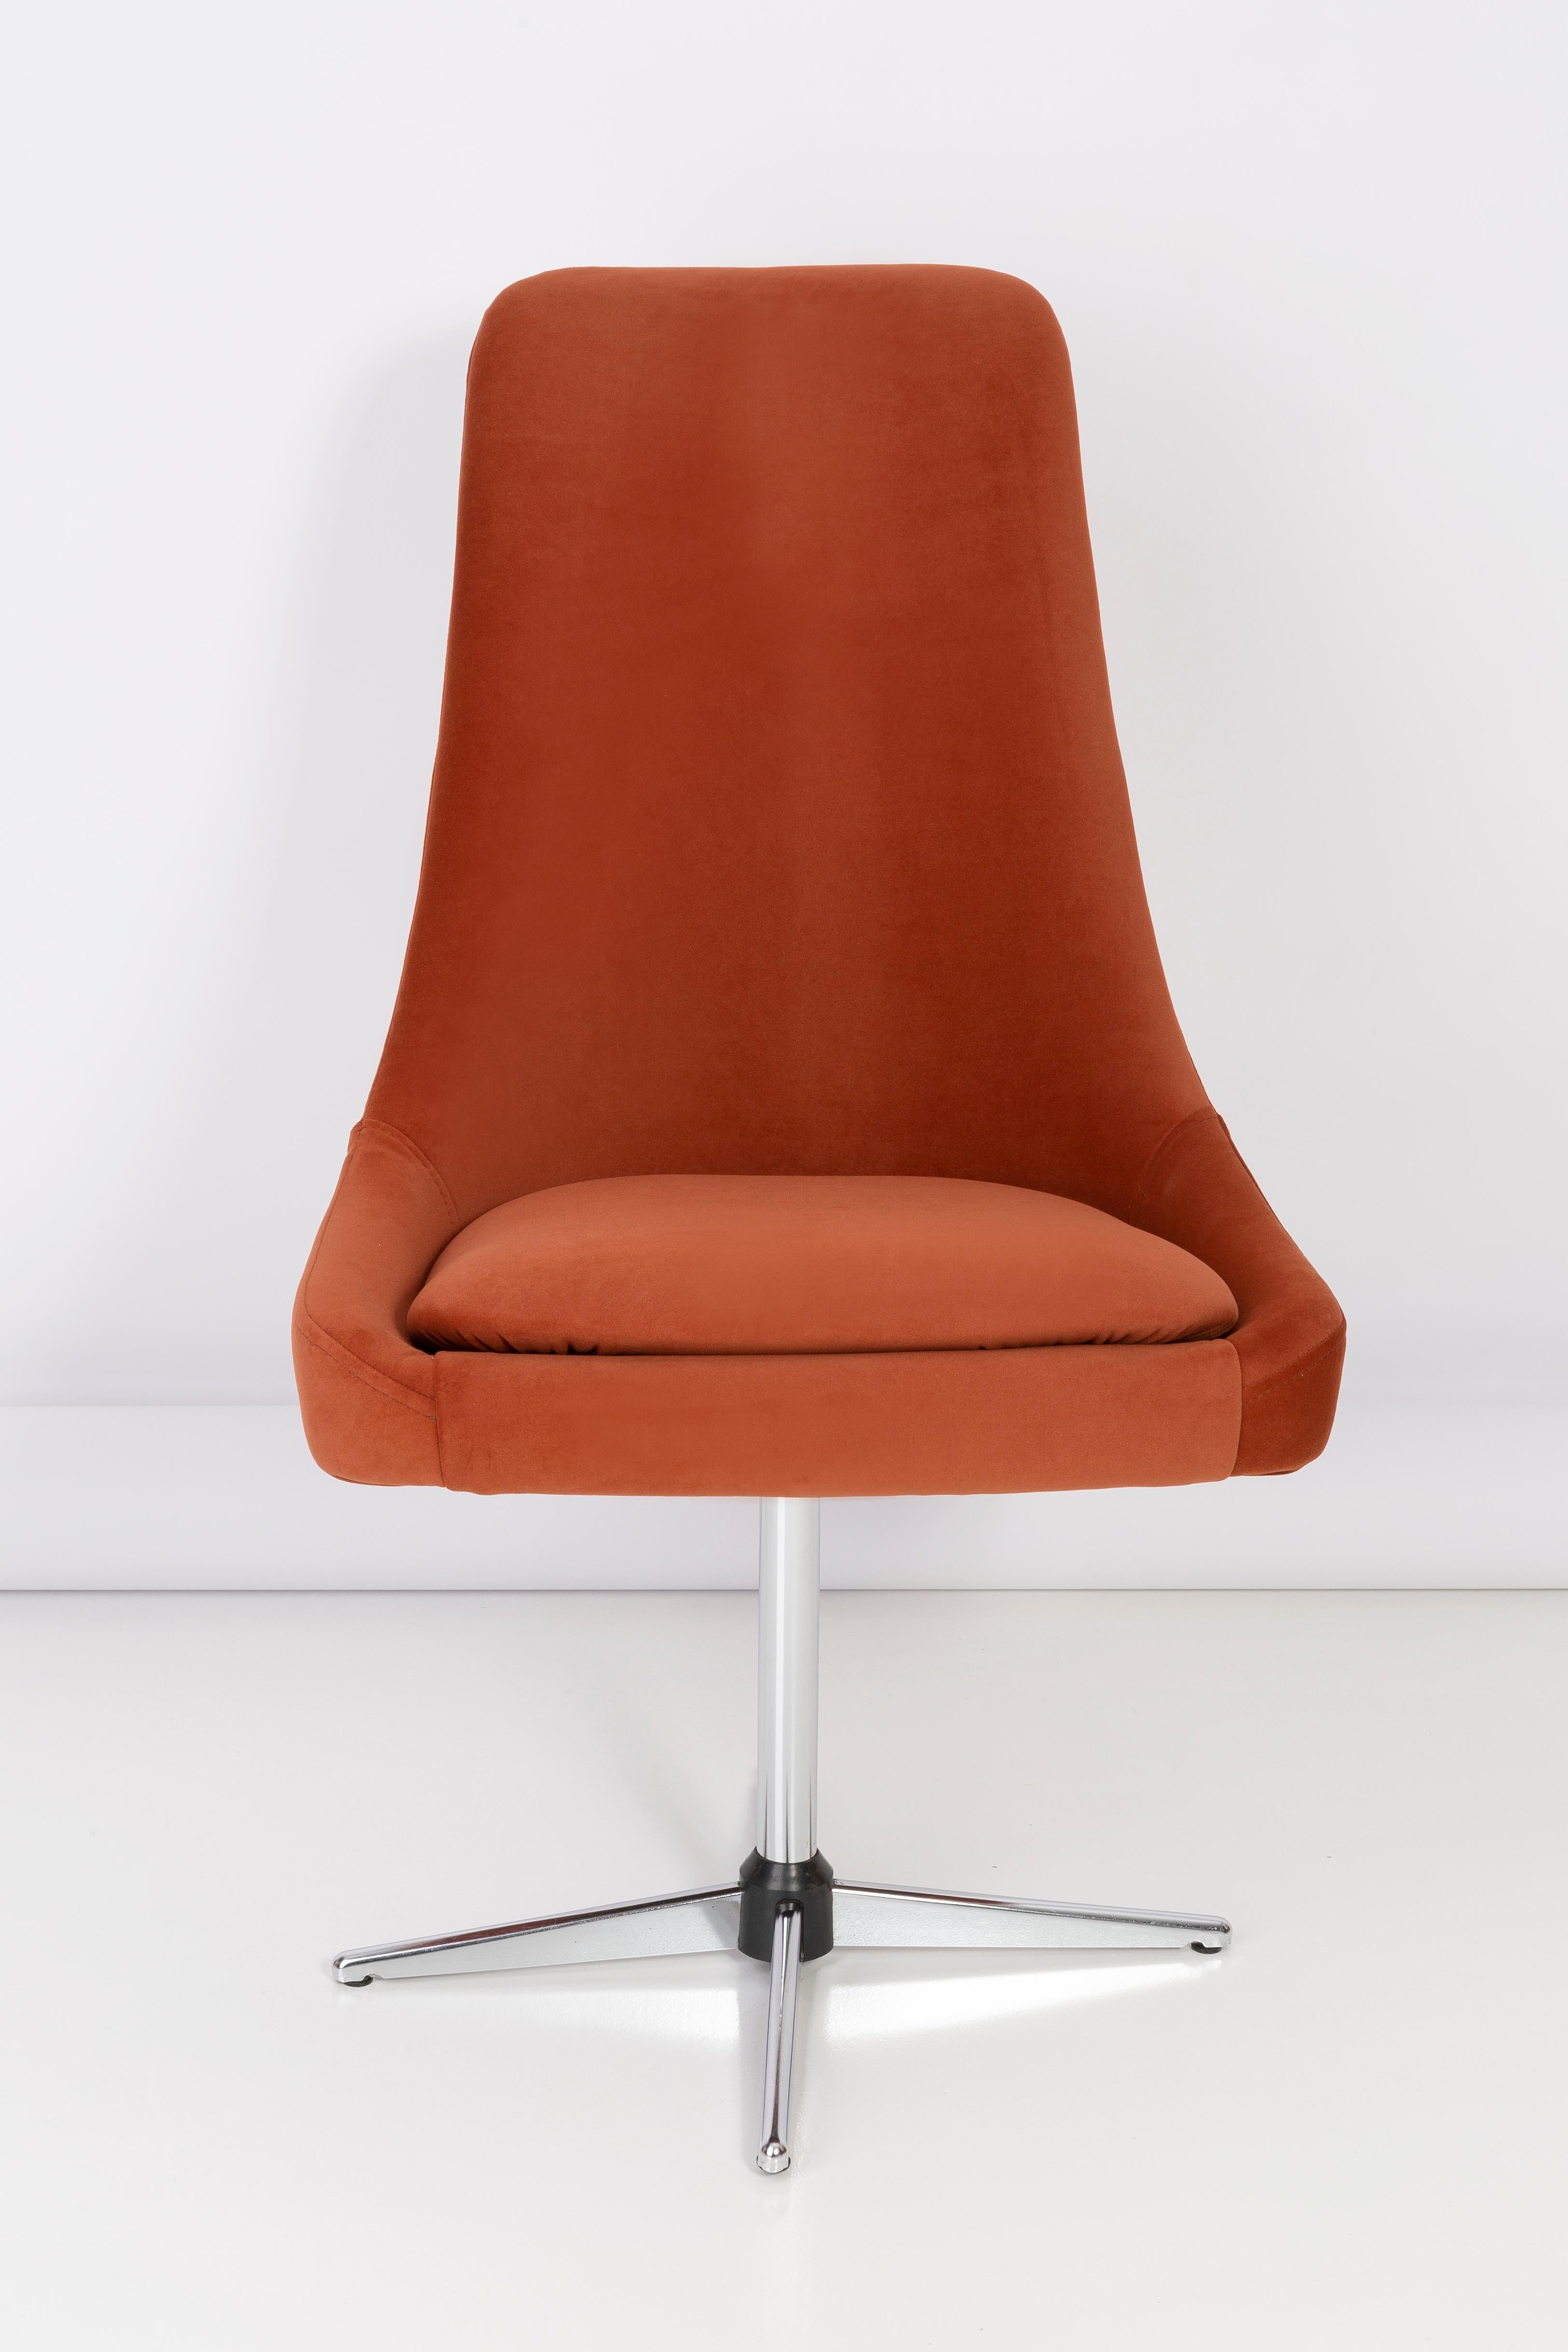 vintage orange swivel chair